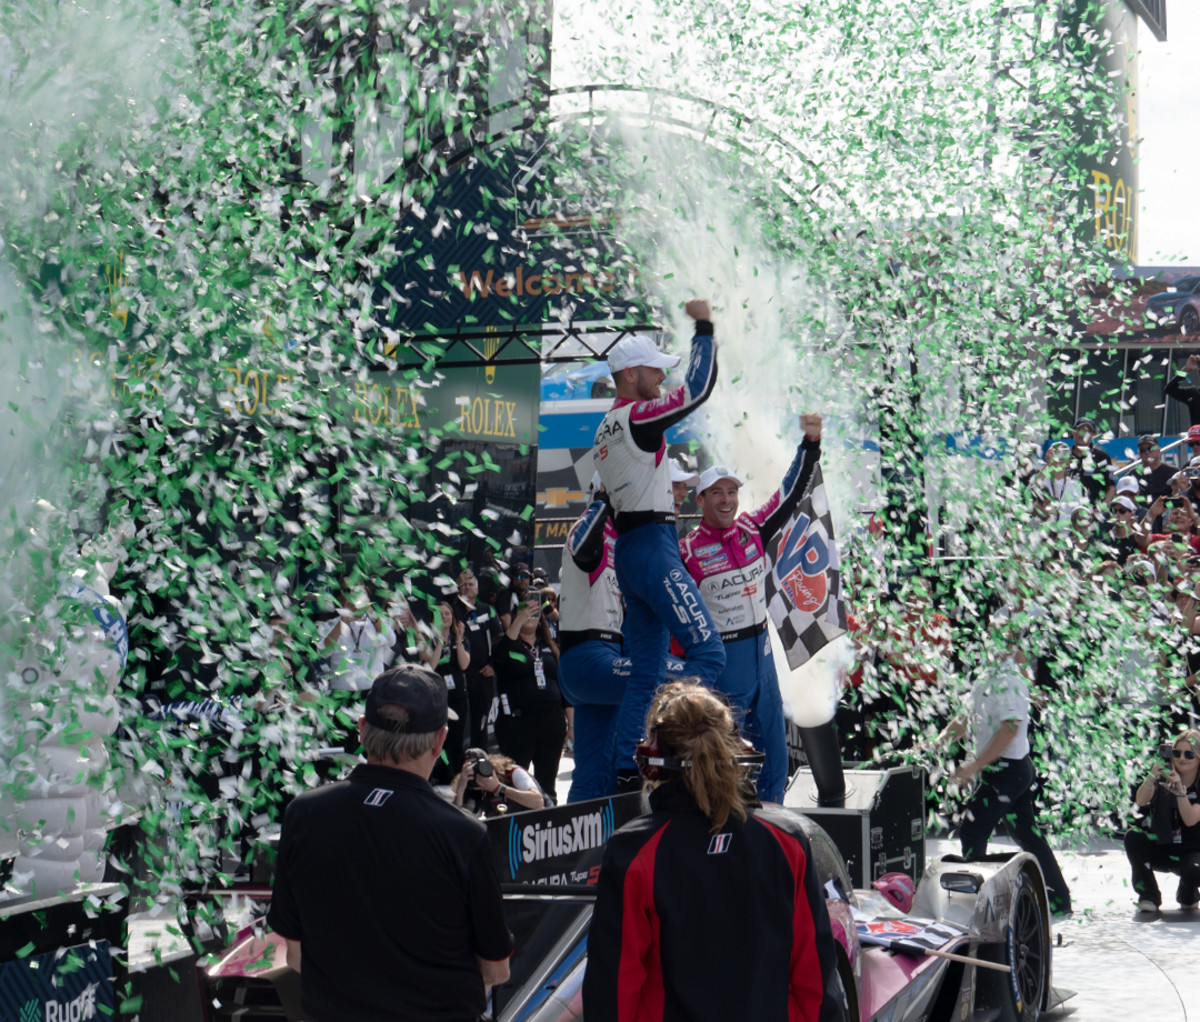 Racecar drivers celebrating a win at the Rolex 24 at Daytona race.